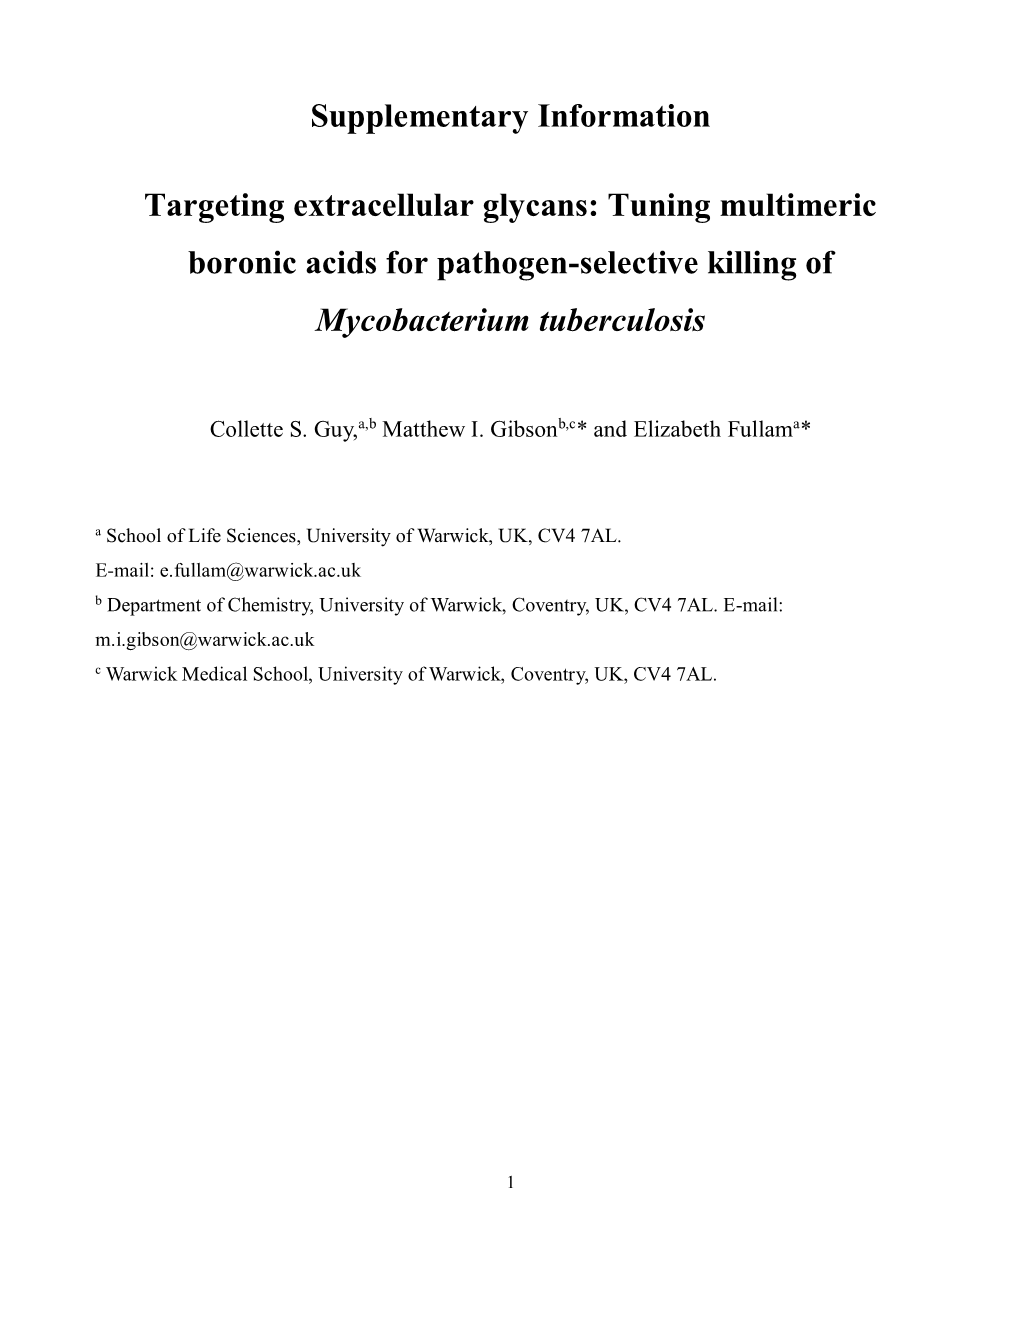 Tuning Multimeric Boronic Acids for Pathogen-Selective Killing of Mycobacterium Tuberculosis